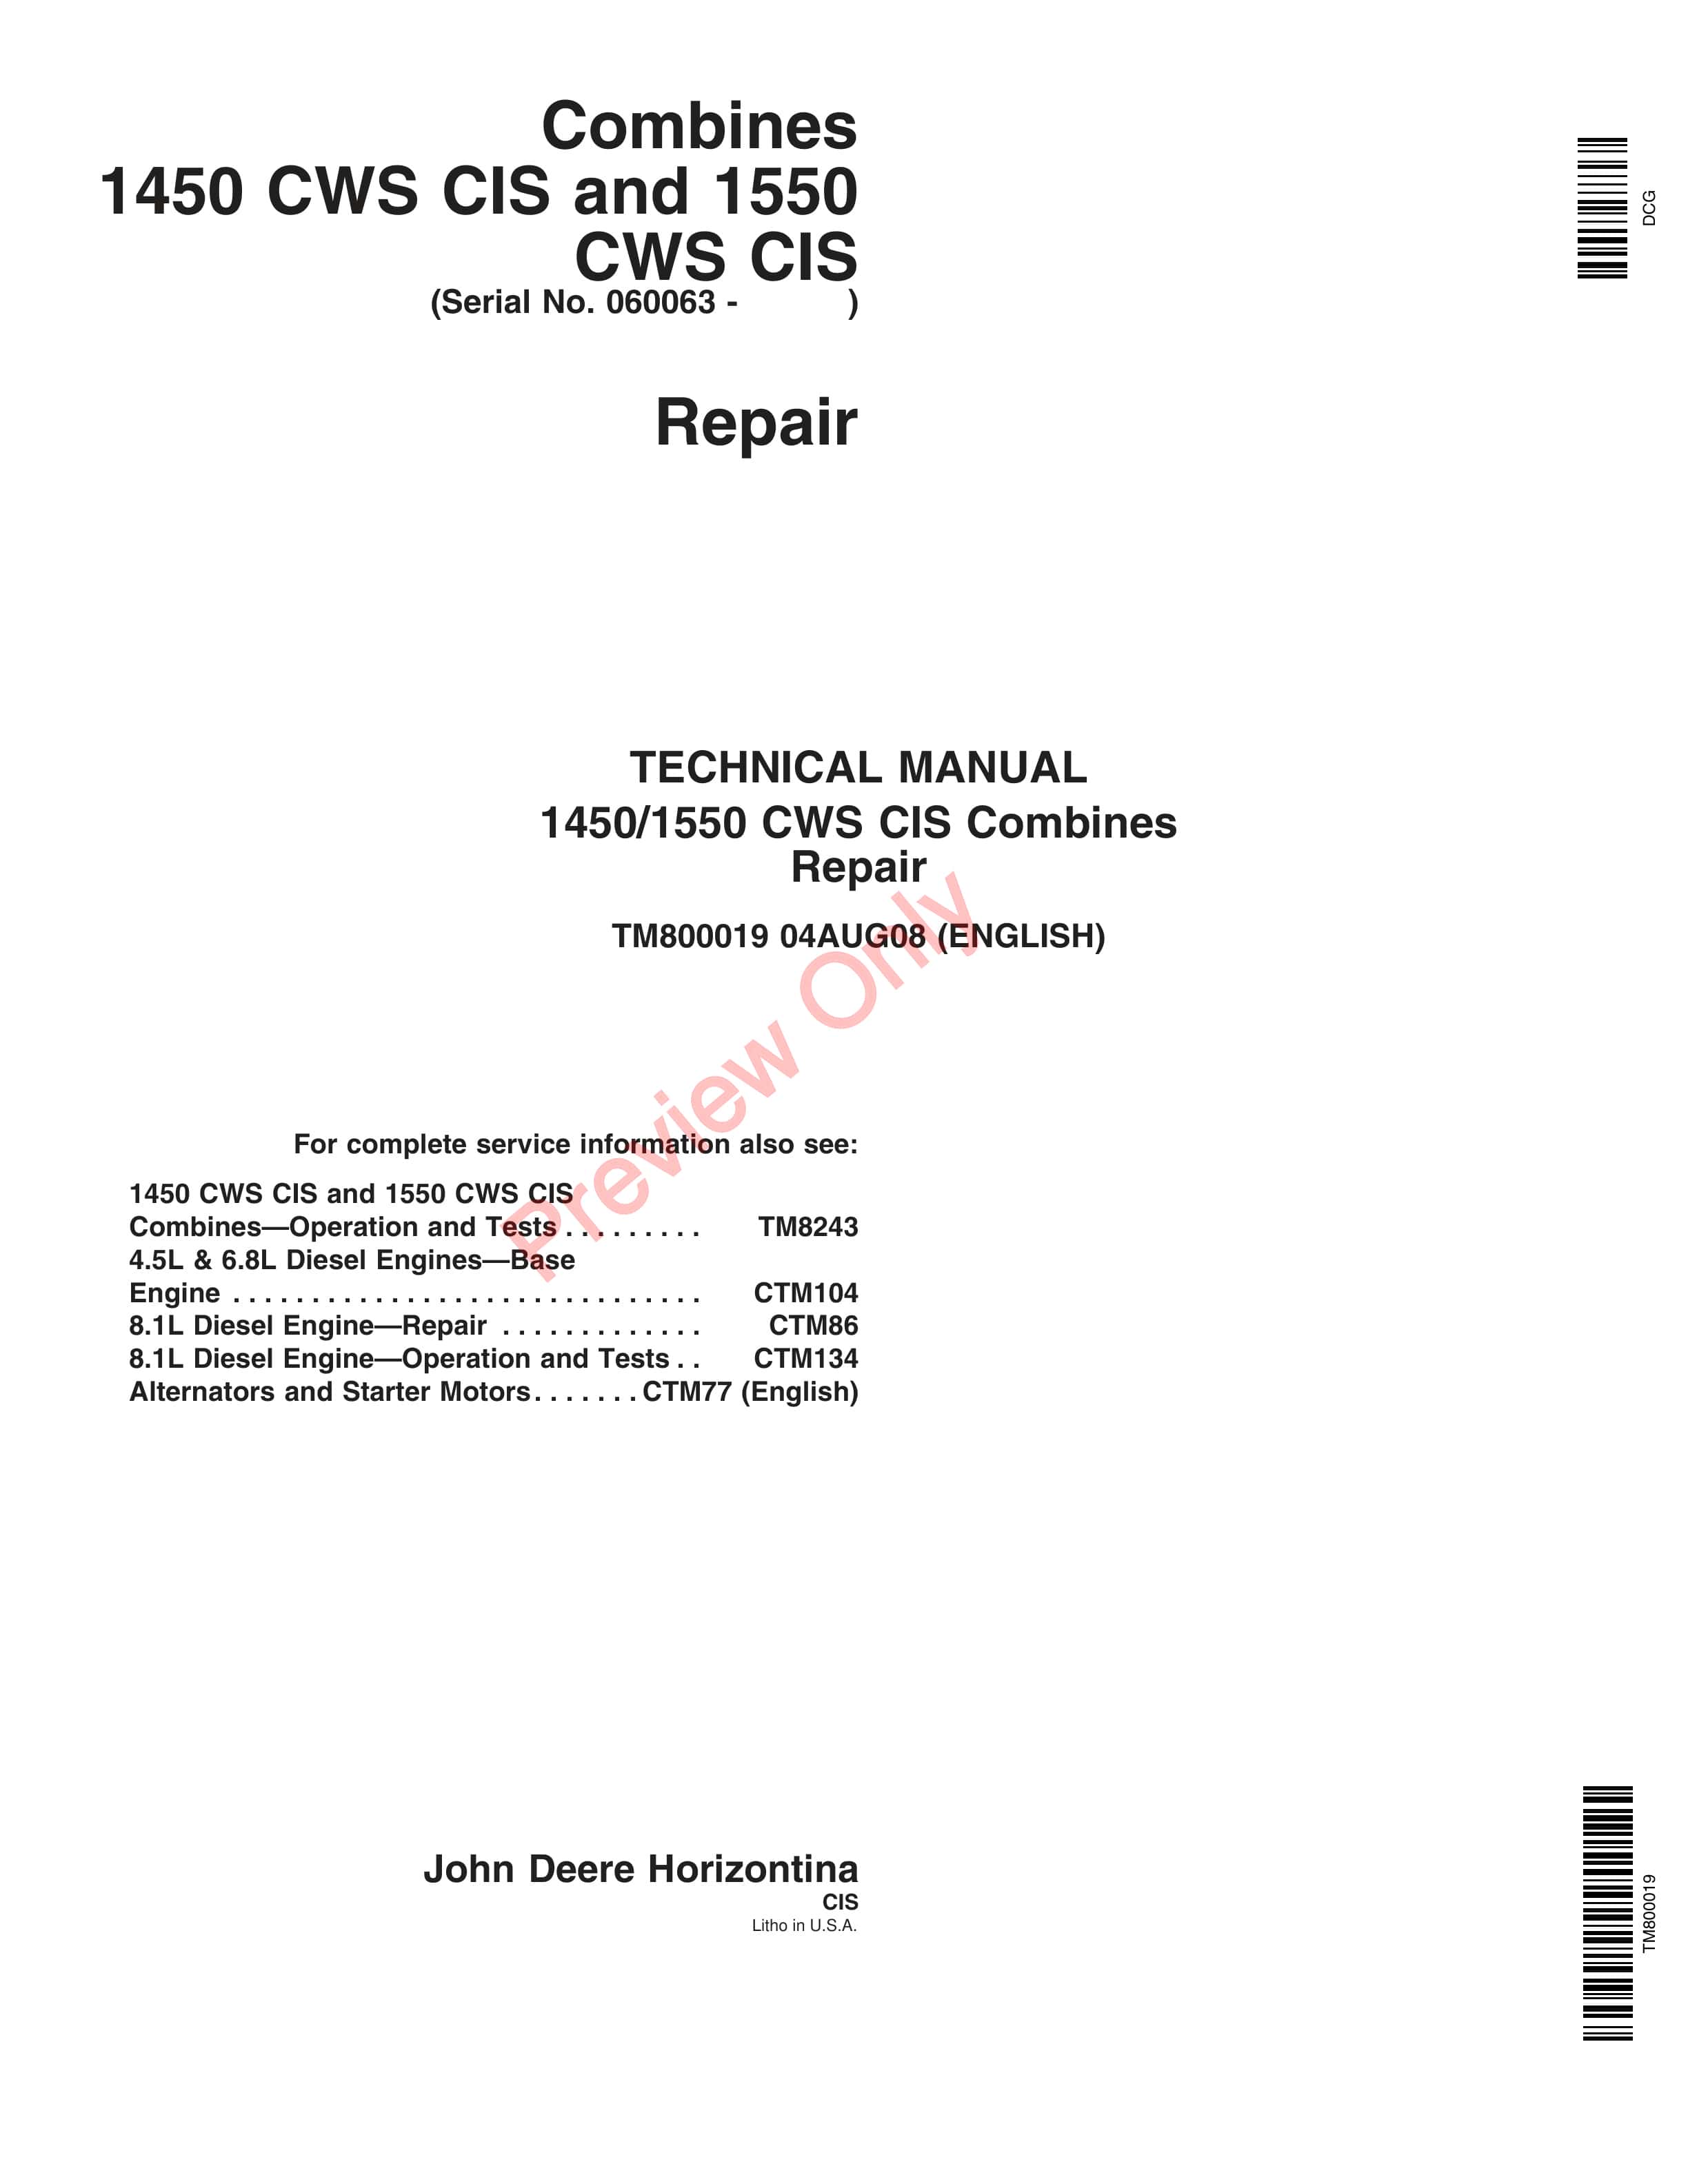 John Deere Combines 1450 CWS CIS and 1550 CWS CIS Technical Manual TM800019 04AUG08 1